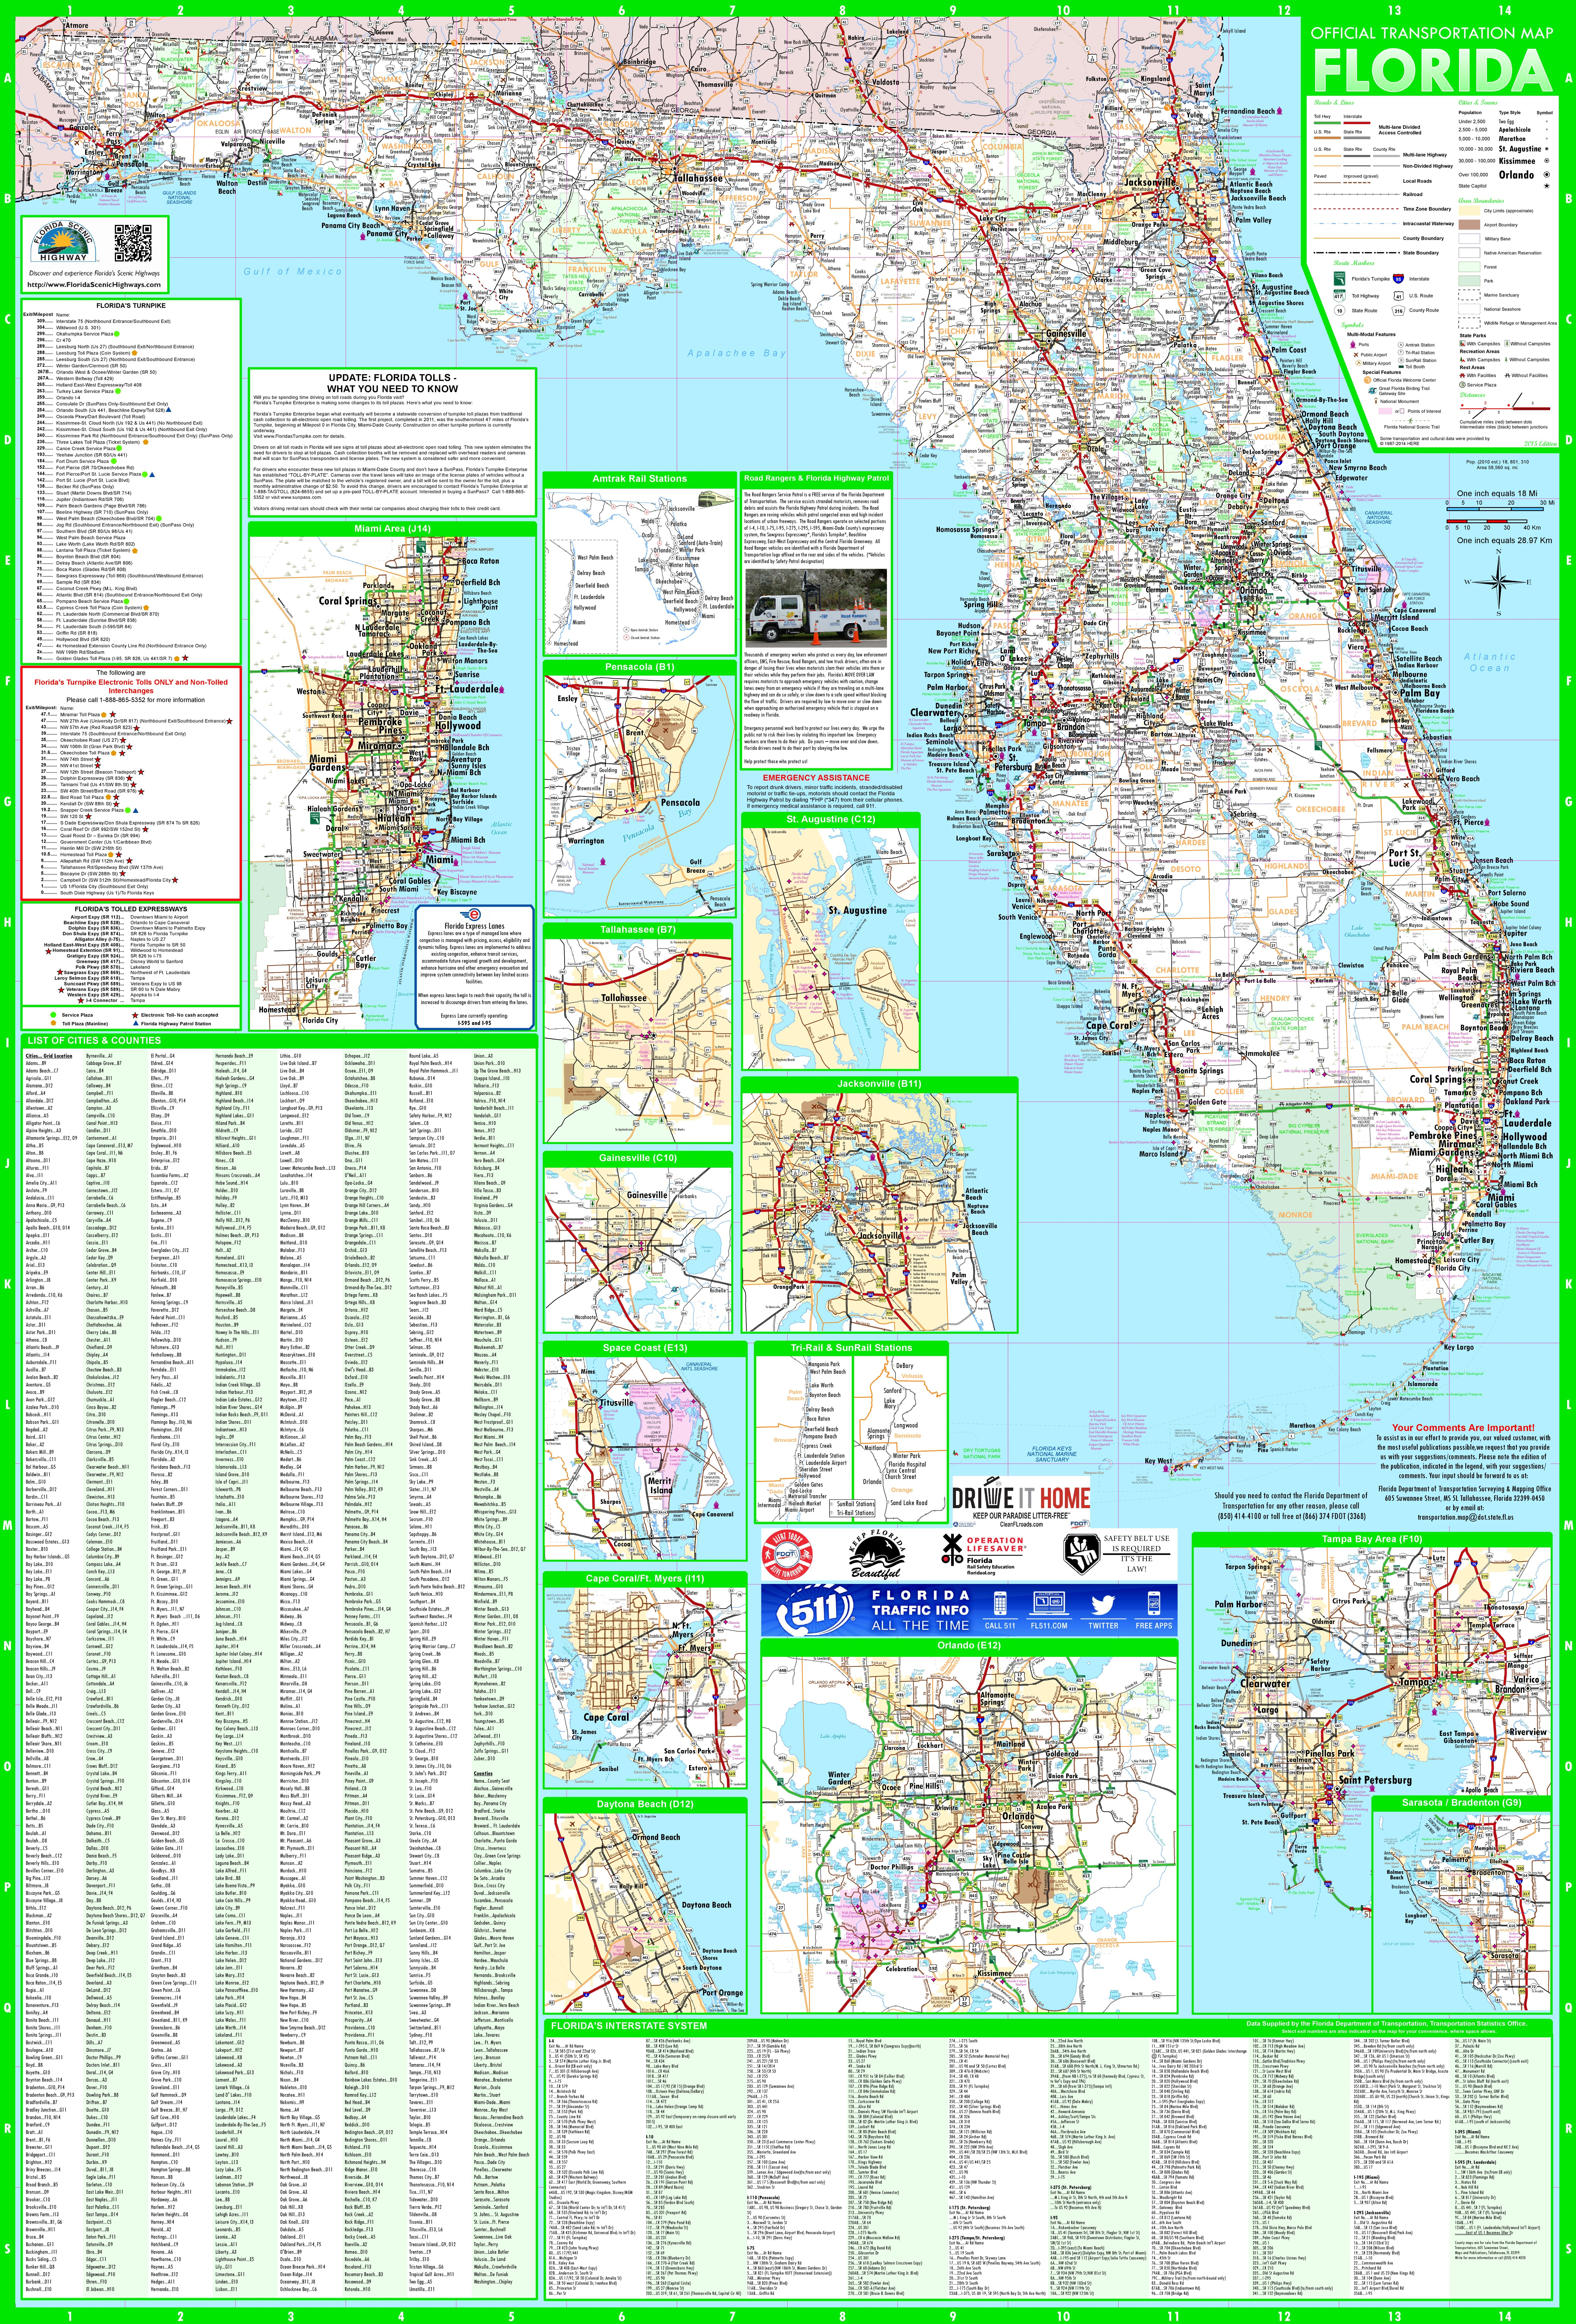 Florida State Maps | Usa | Maps Of Florida (Fl) - Road Map Of South Florida